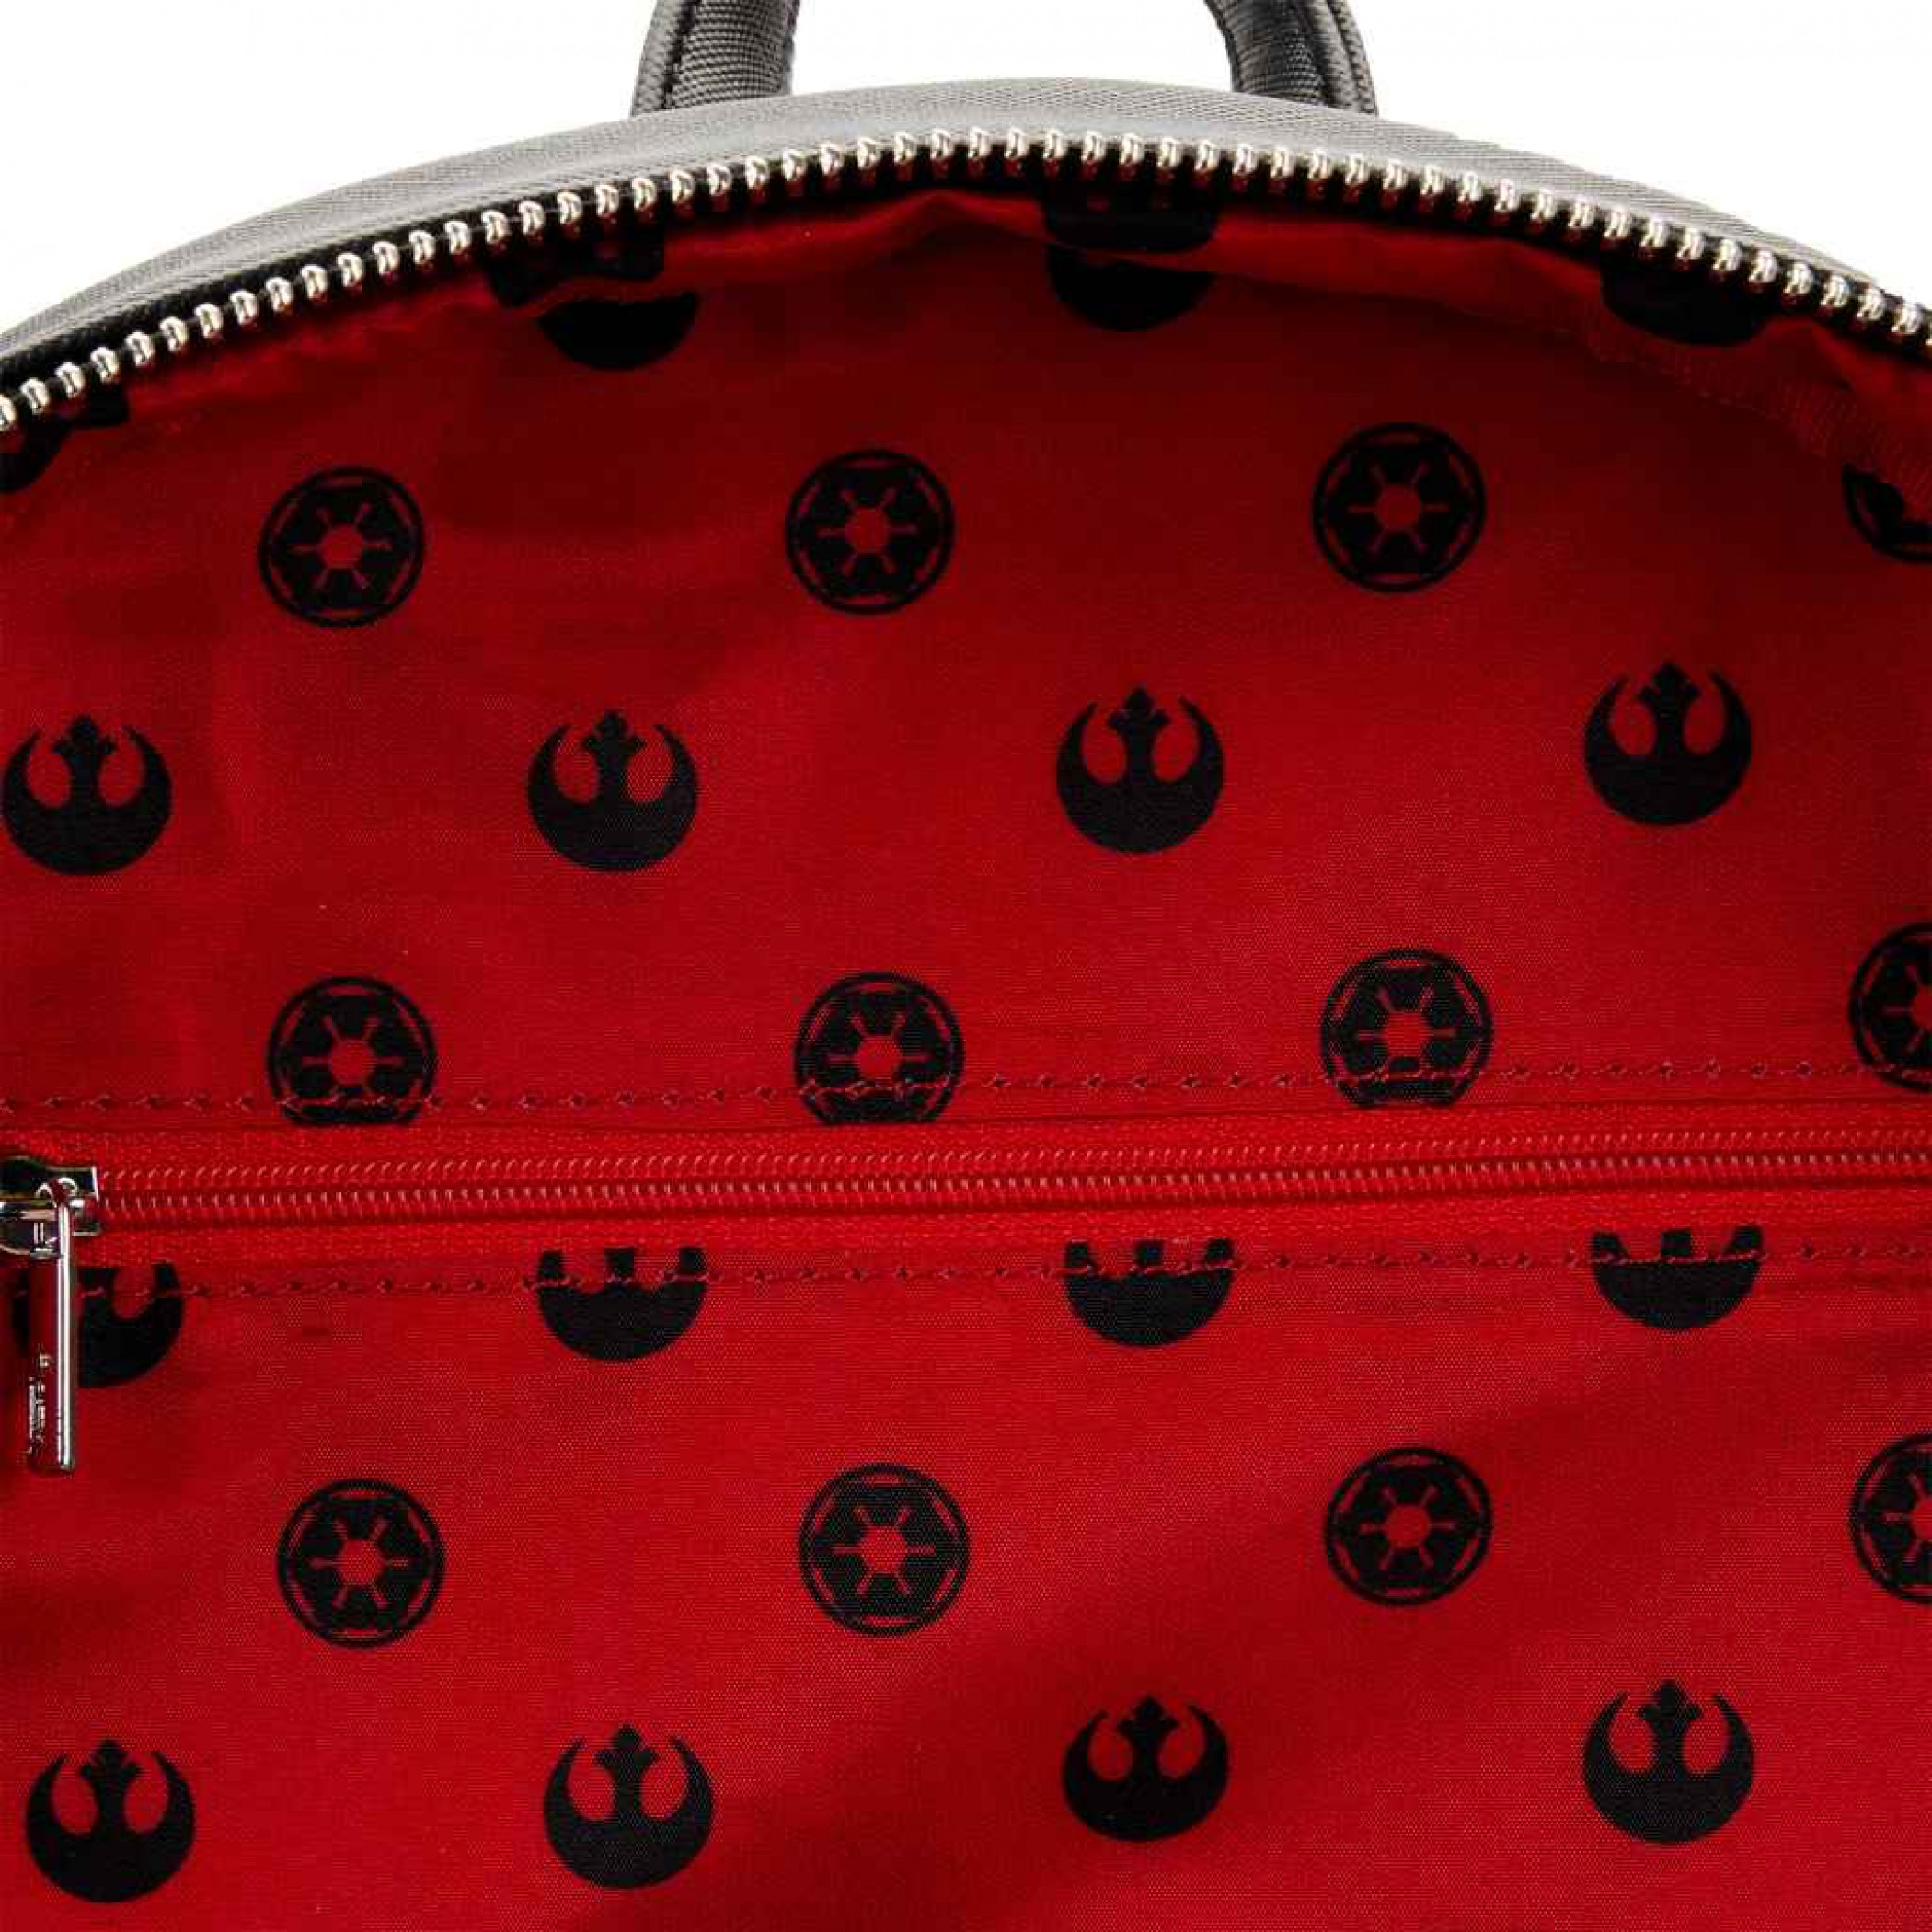 Star Wars Prequel Trilogy Triple Pocket Loungefly Mini Backpack